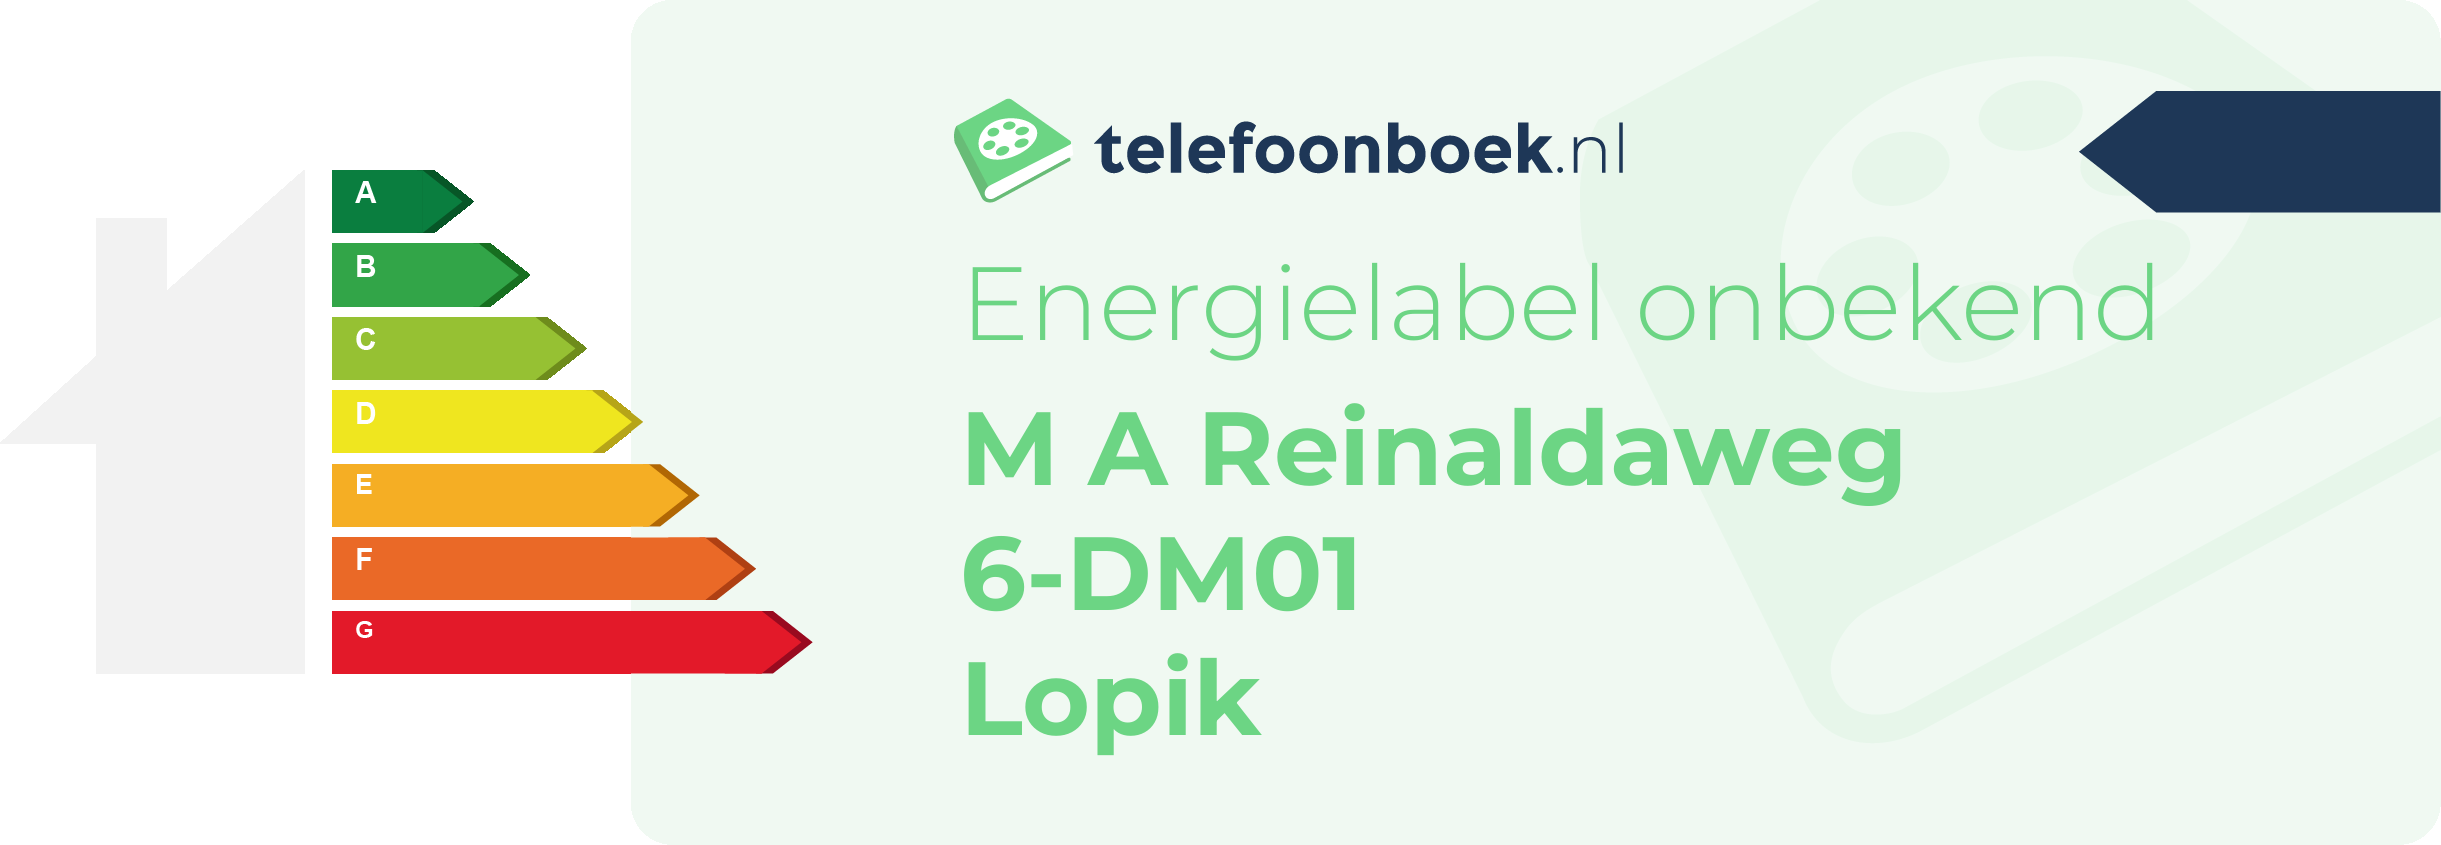 Energielabel M A Reinaldaweg 6-DM01 Lopik